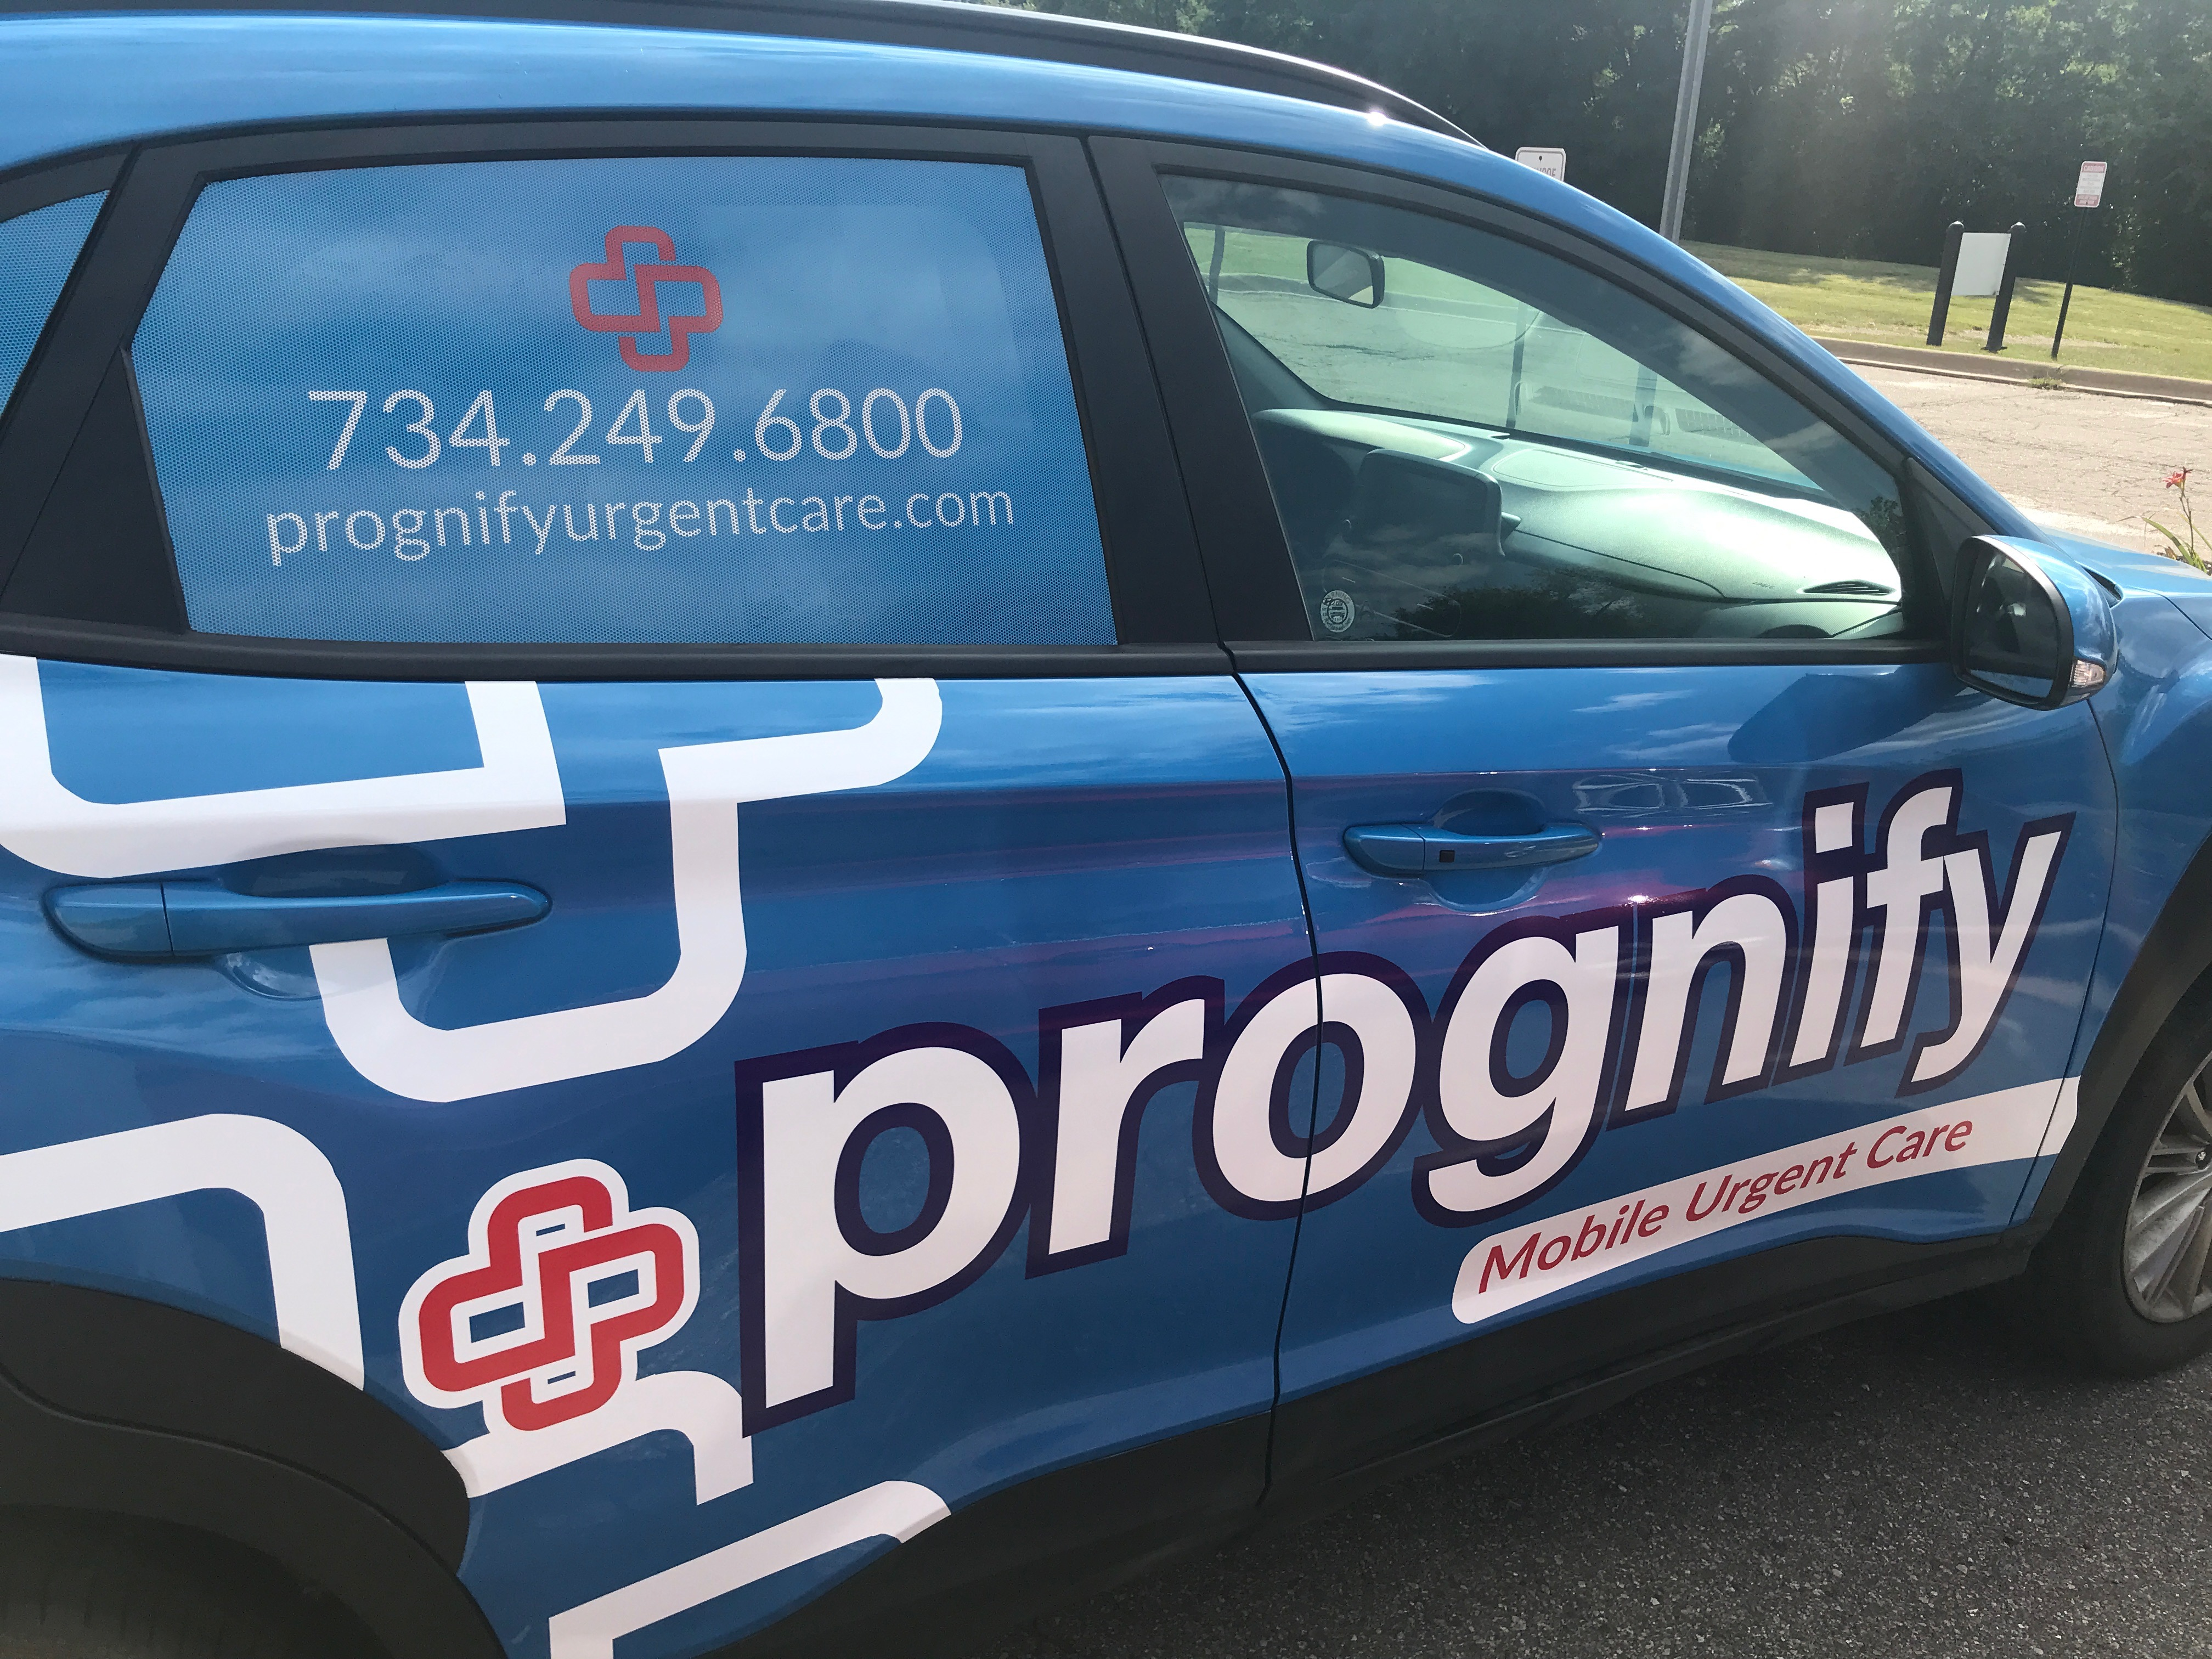 Prognify Mobile Urgent Care - Ann Arbor Mobile Clinic Logo